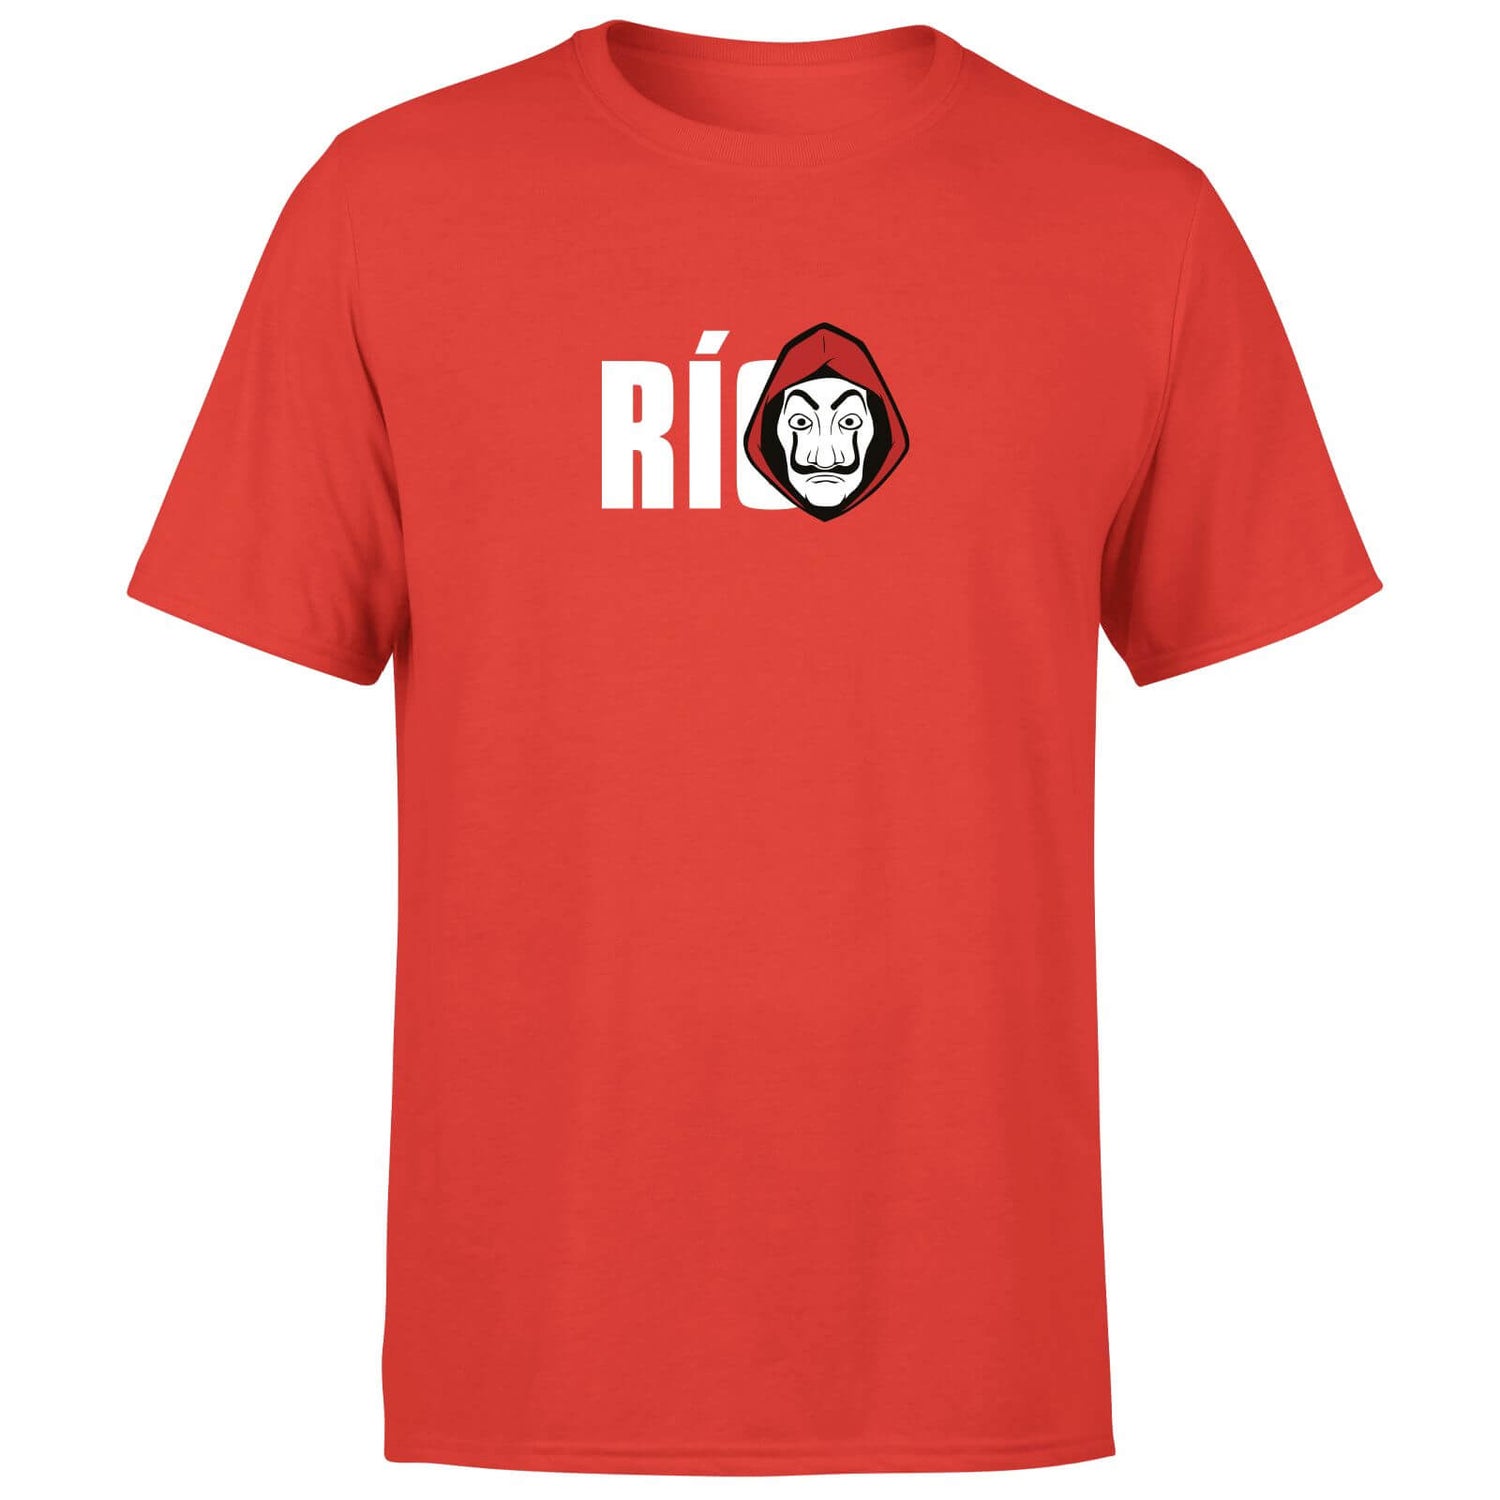 Money Heist Rio Men's T-Shirt - Red